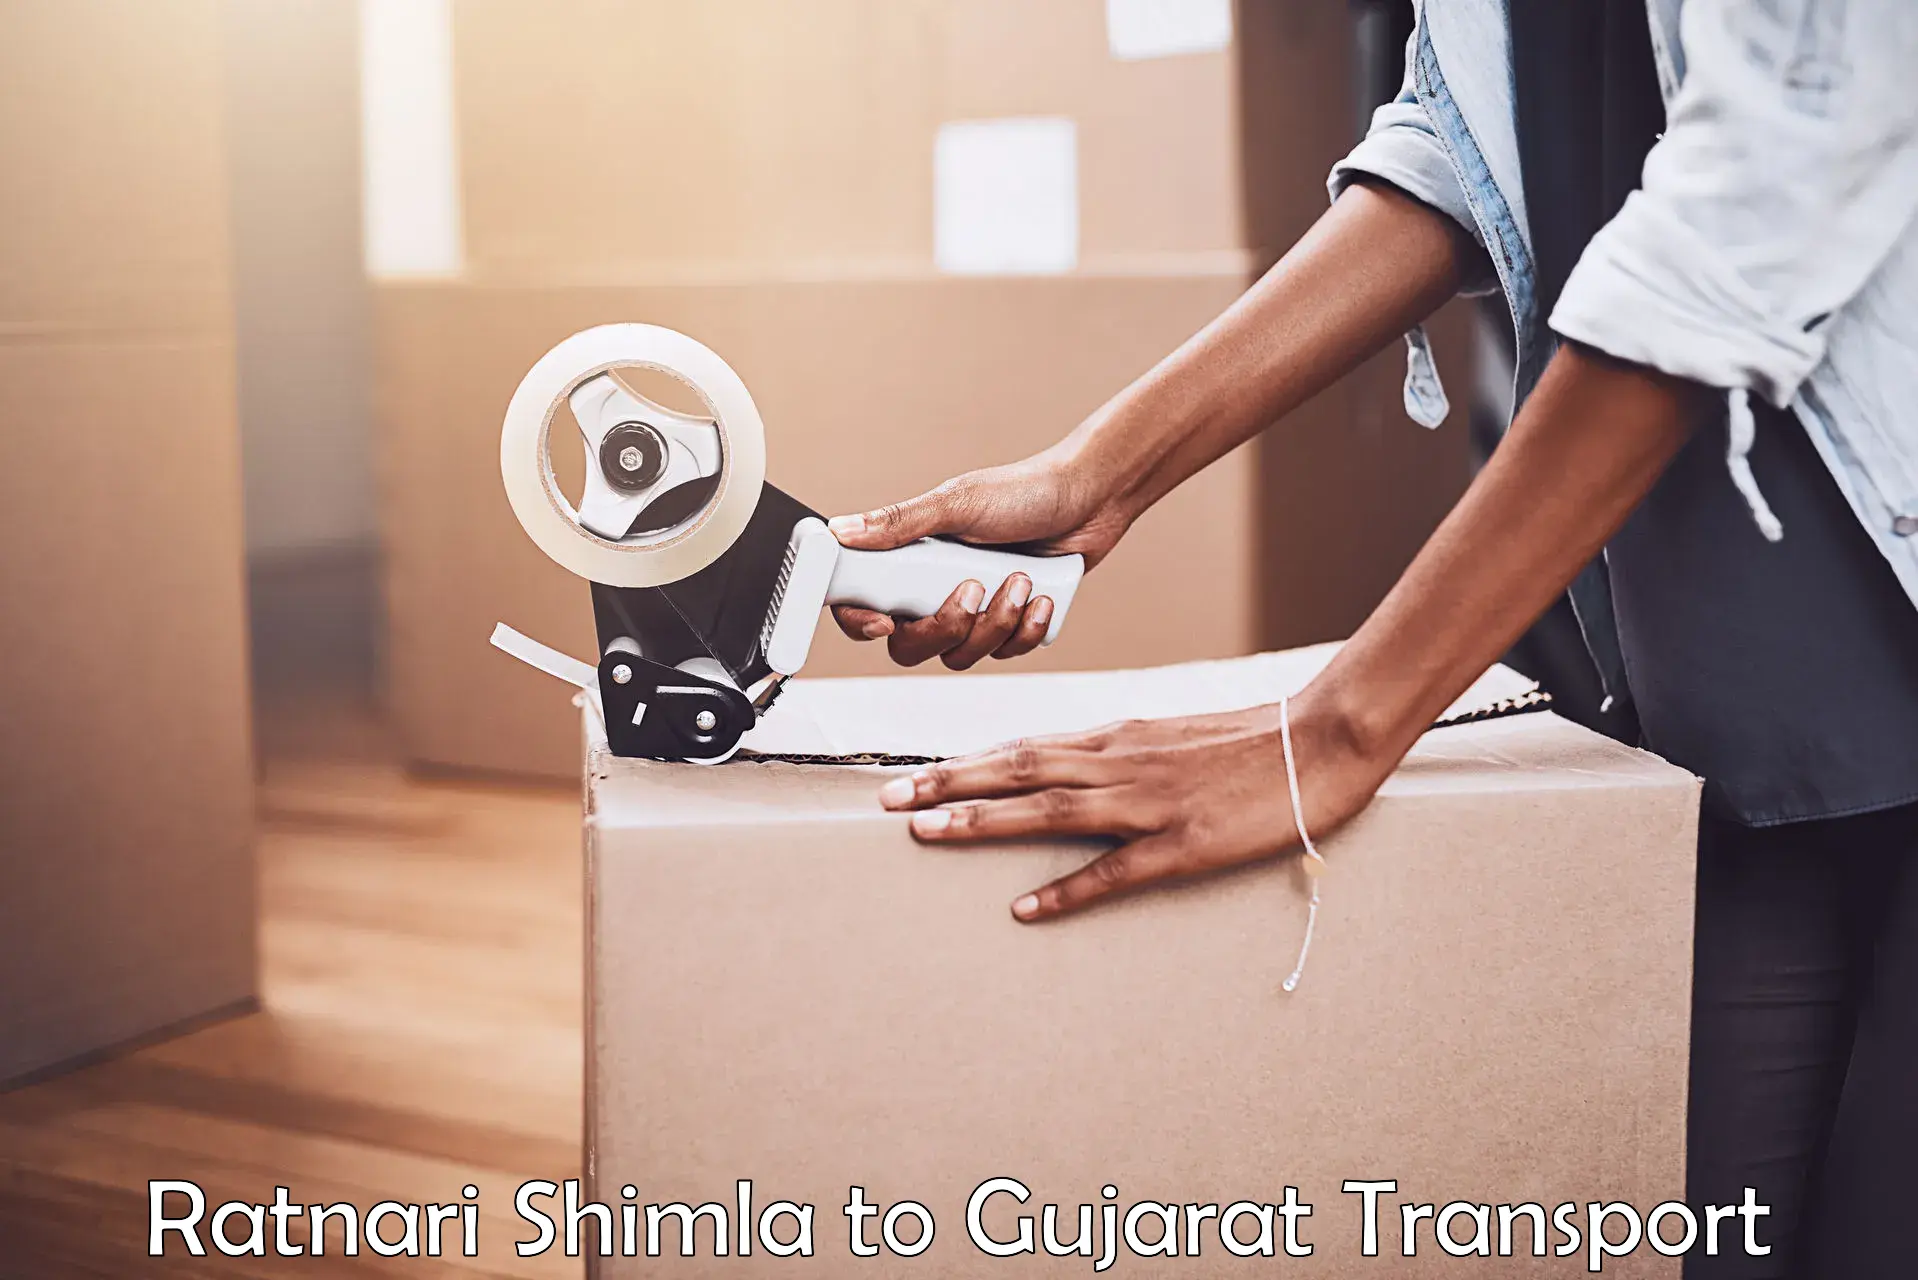 Furniture transport service Ratnari Shimla to Gujarat